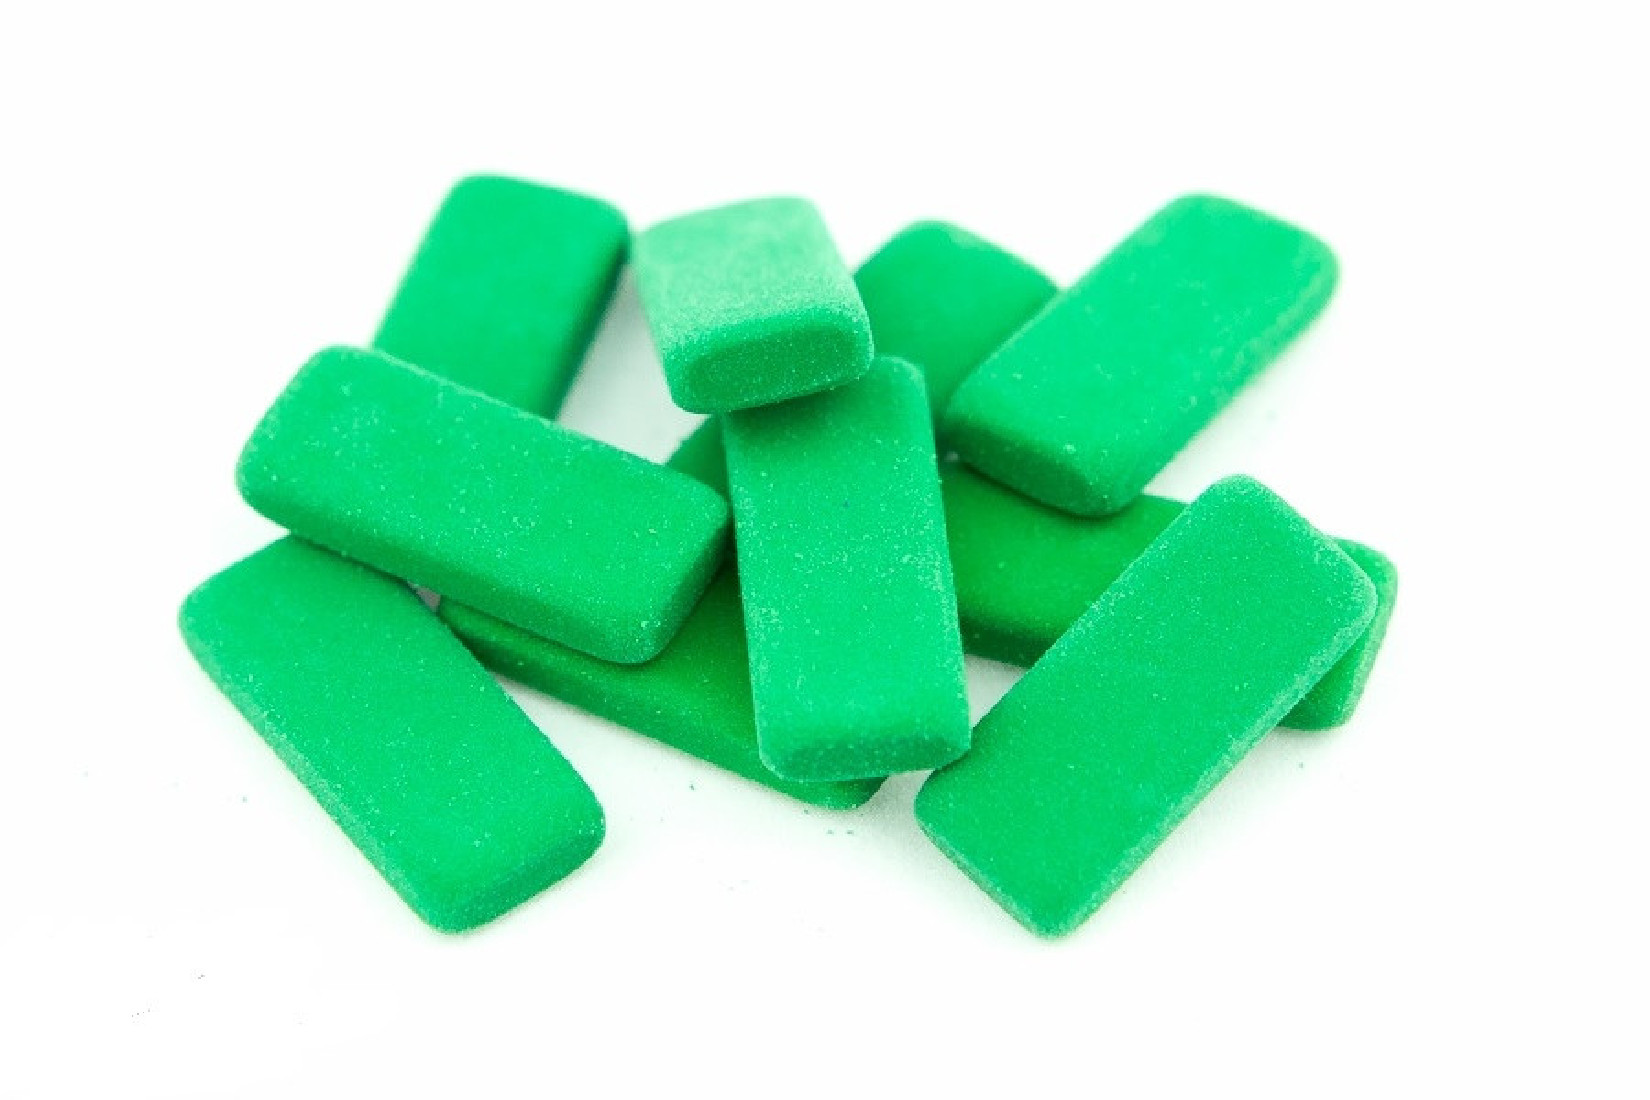 Palomino Blackwing replacement green erasers